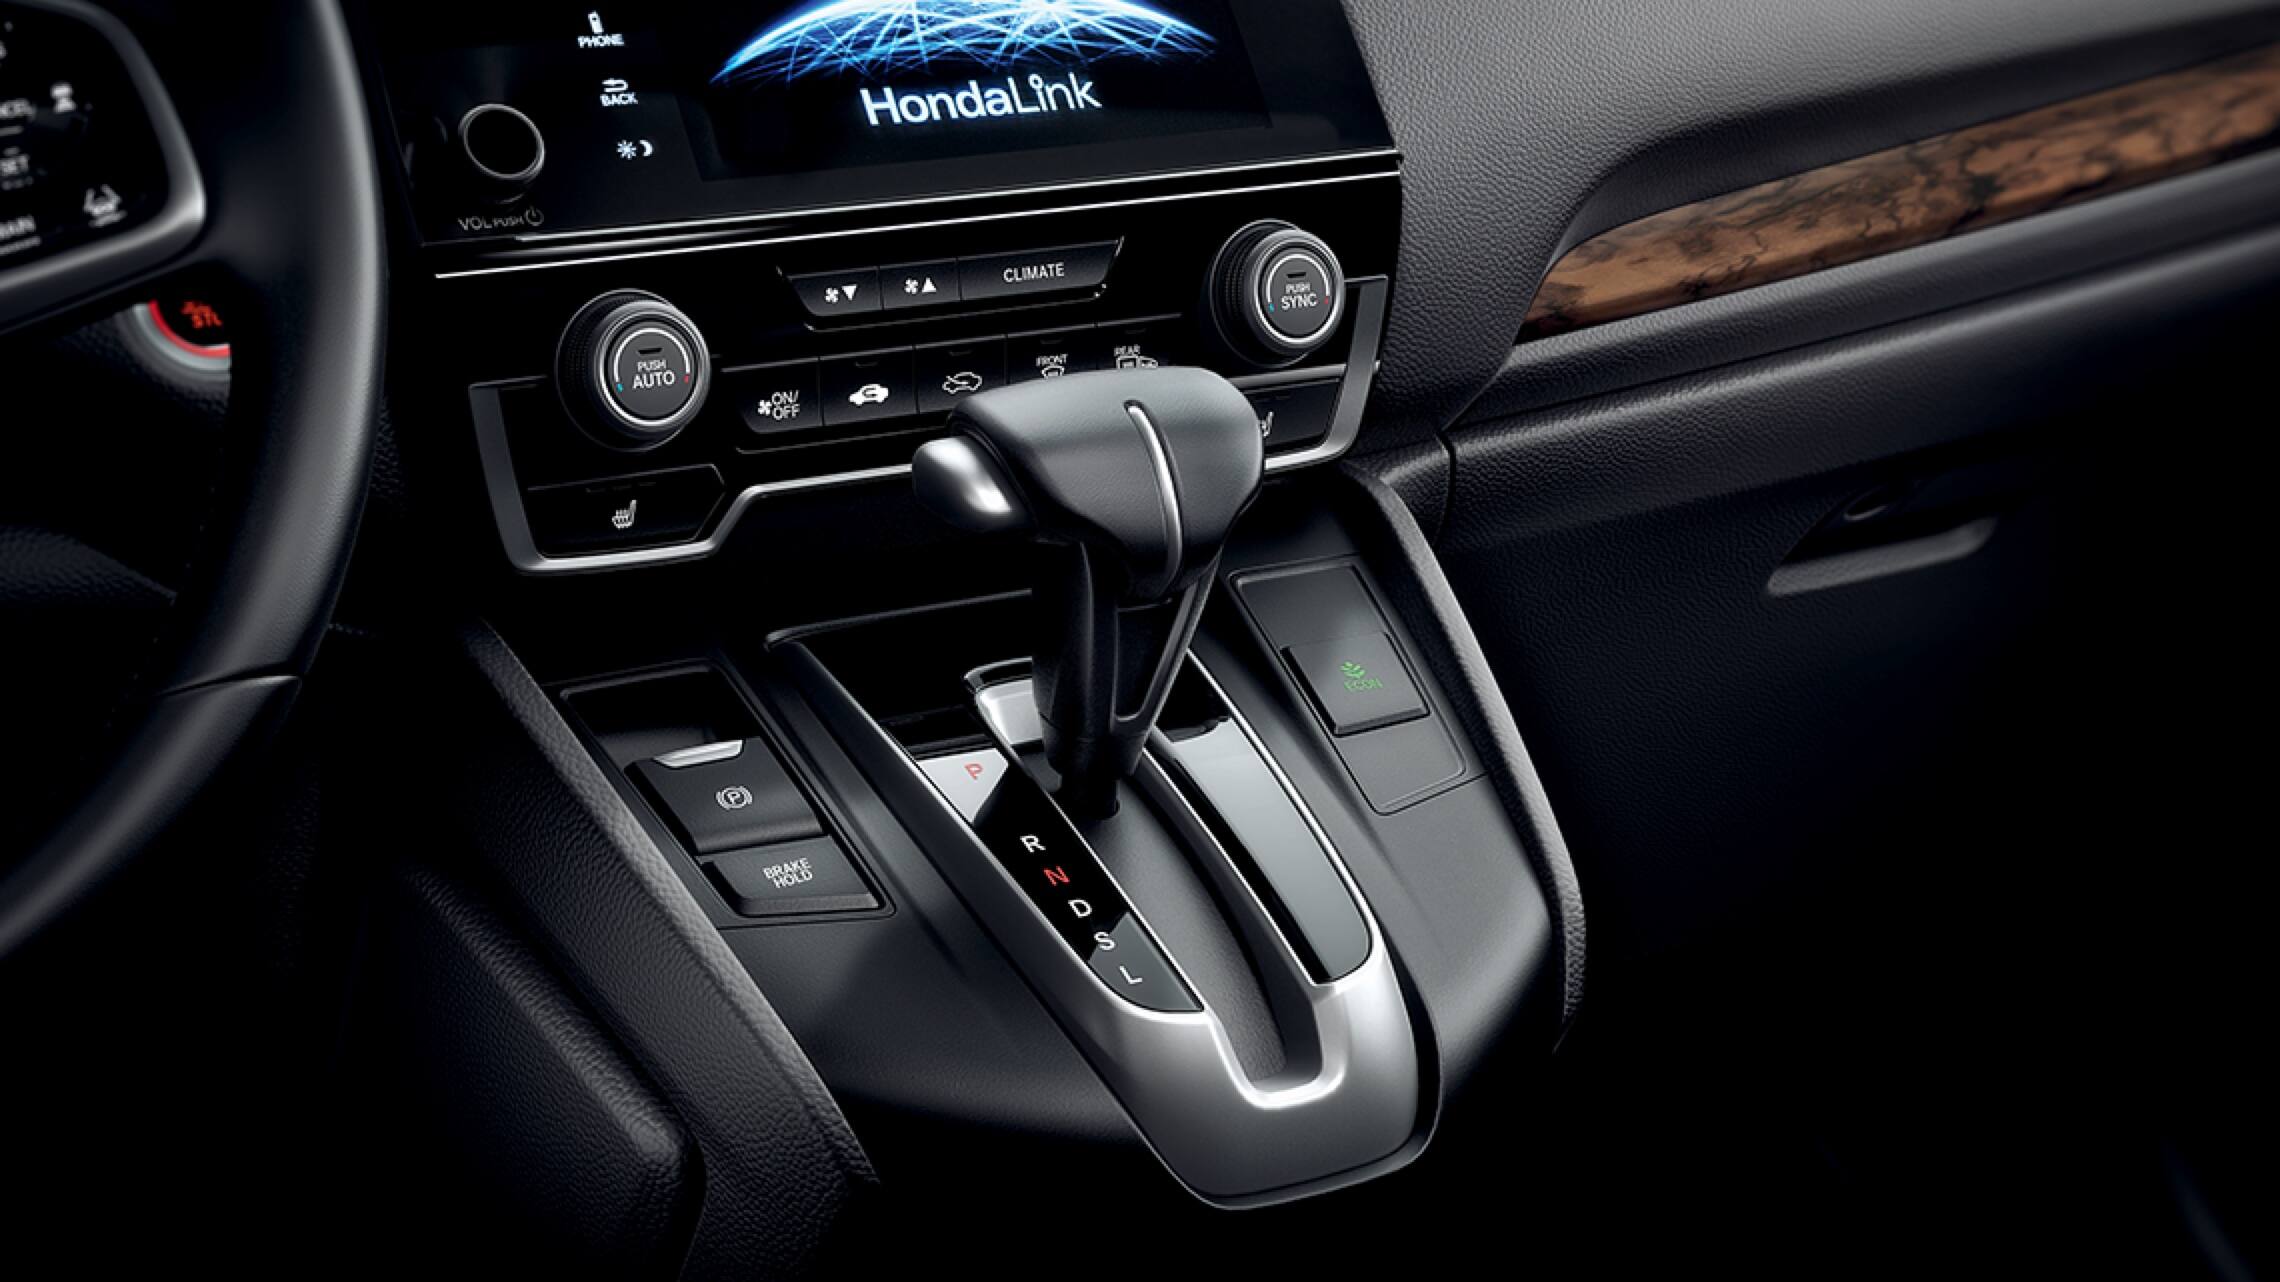 2019 Honda CR-V interior view of electric parking brake. 